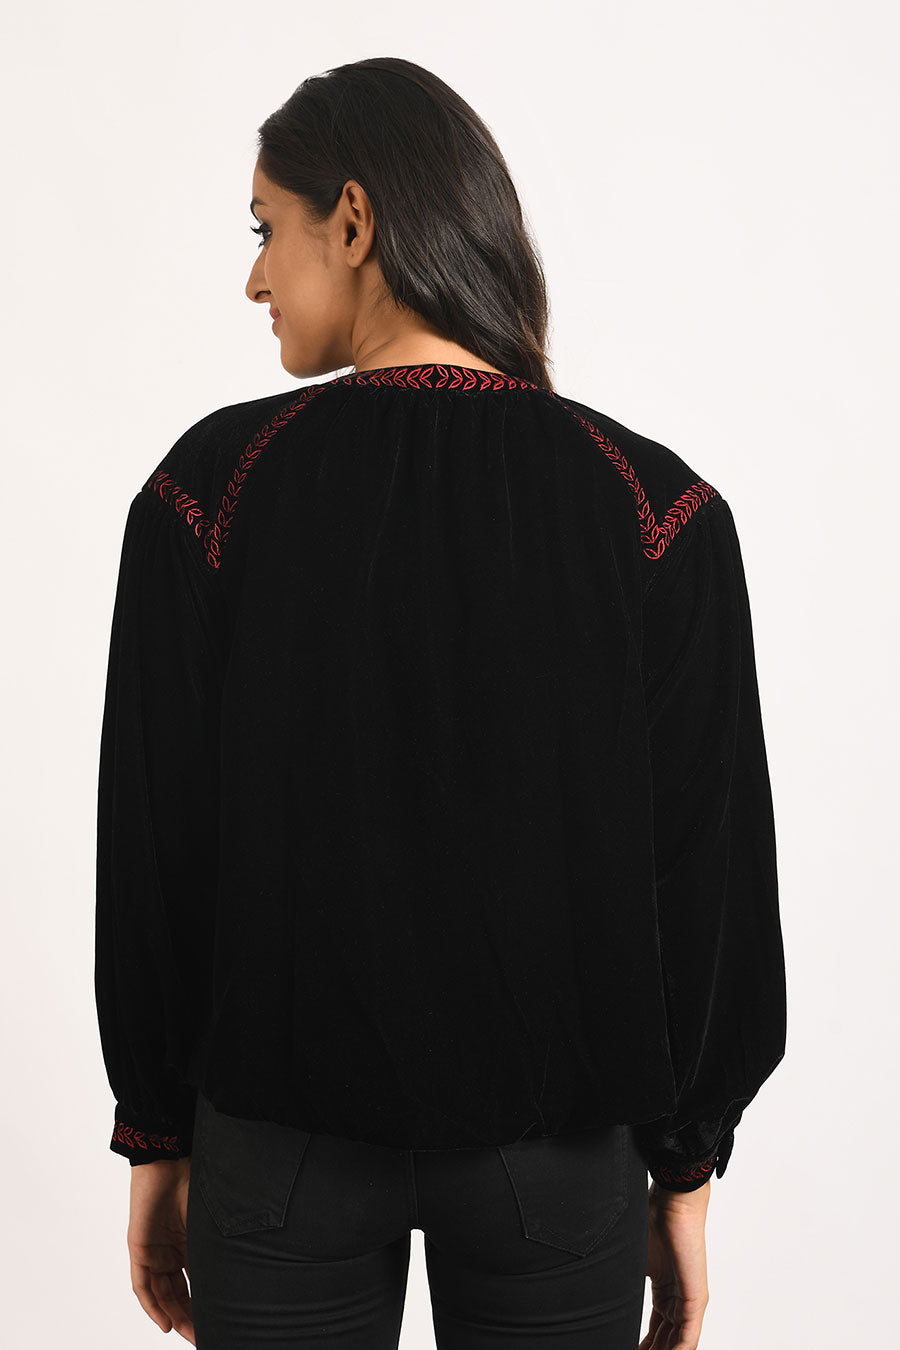 Black Embroidered Jacket